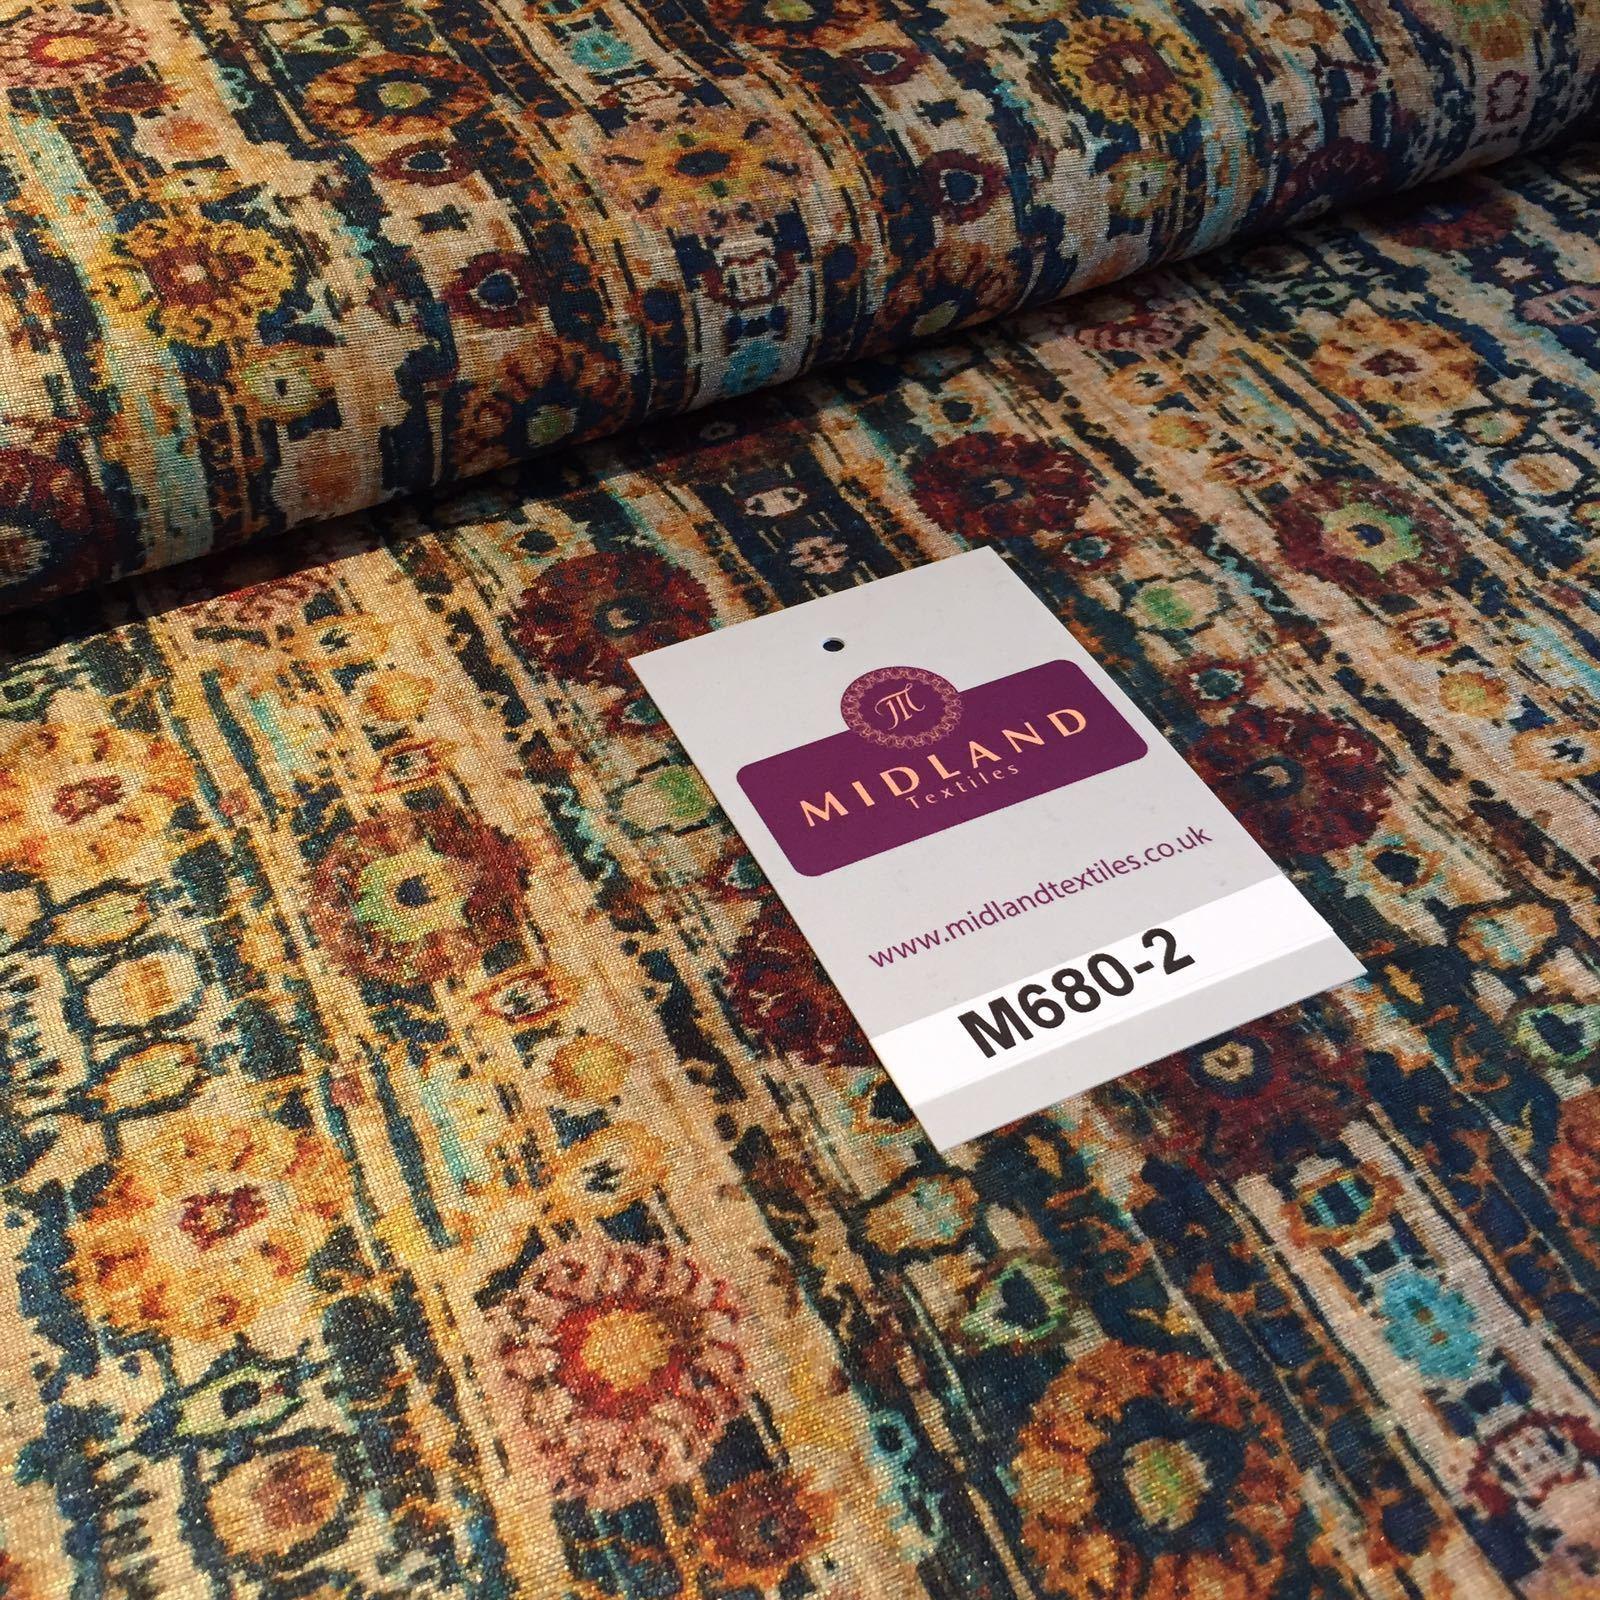 Woven Tussar 100% Silk Printed dress and cushion Fabric 44" M680 Mtex